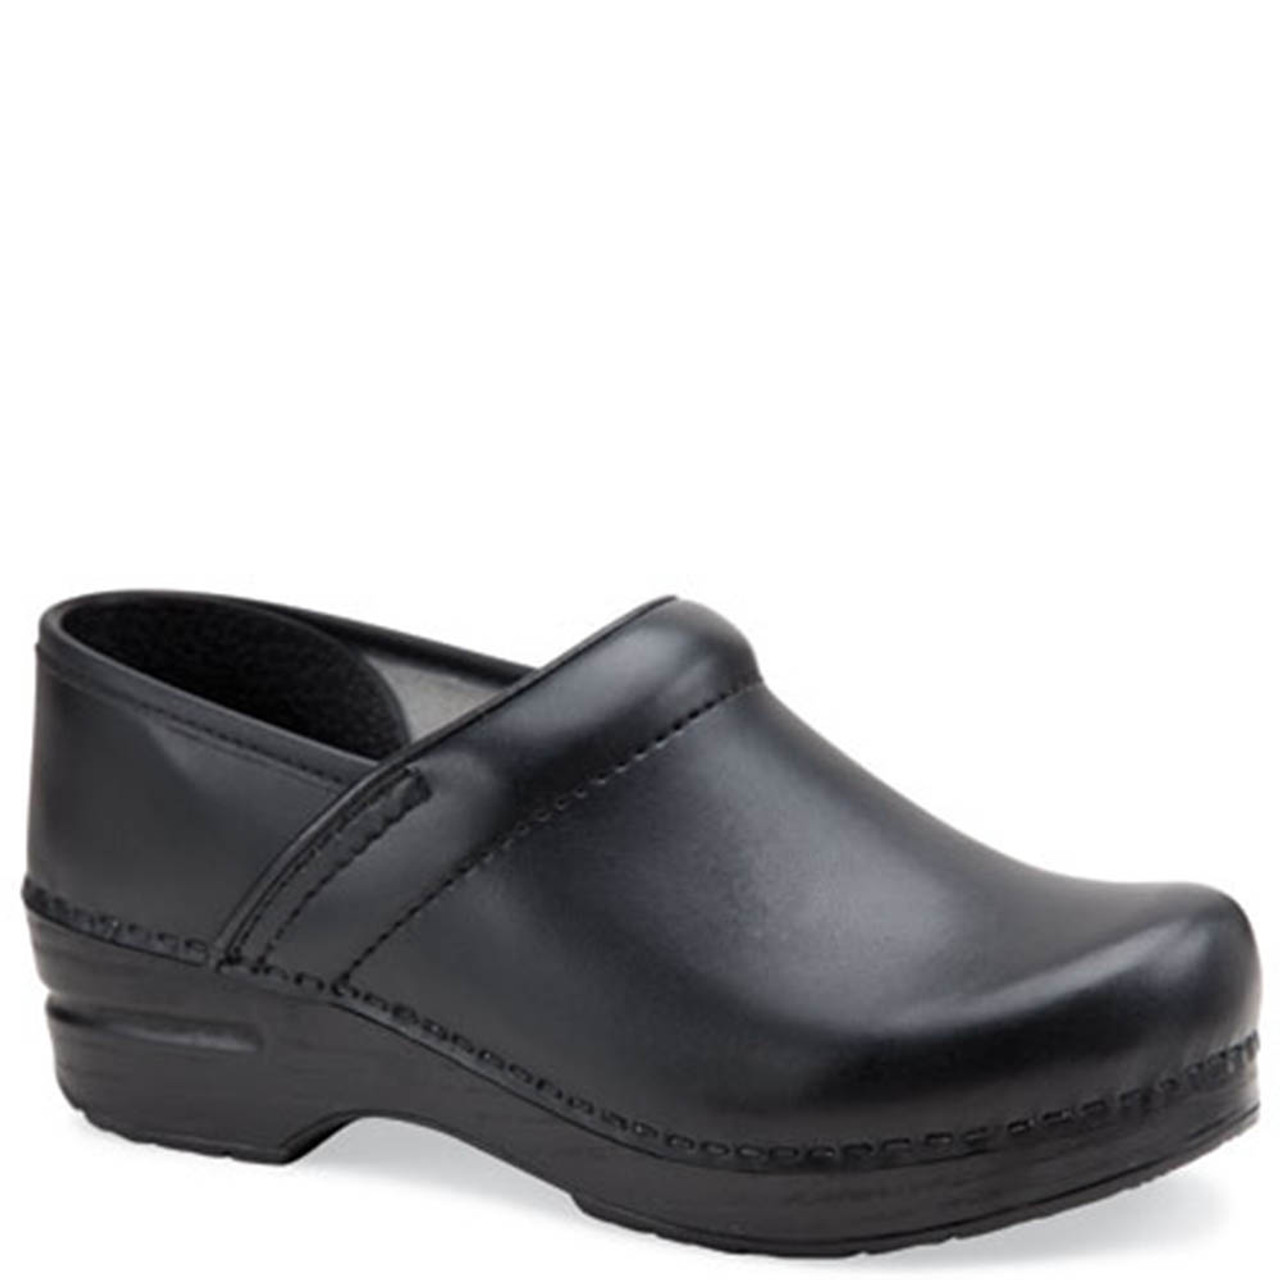 Dansko Professional Black Box Clogs - Family Footwear